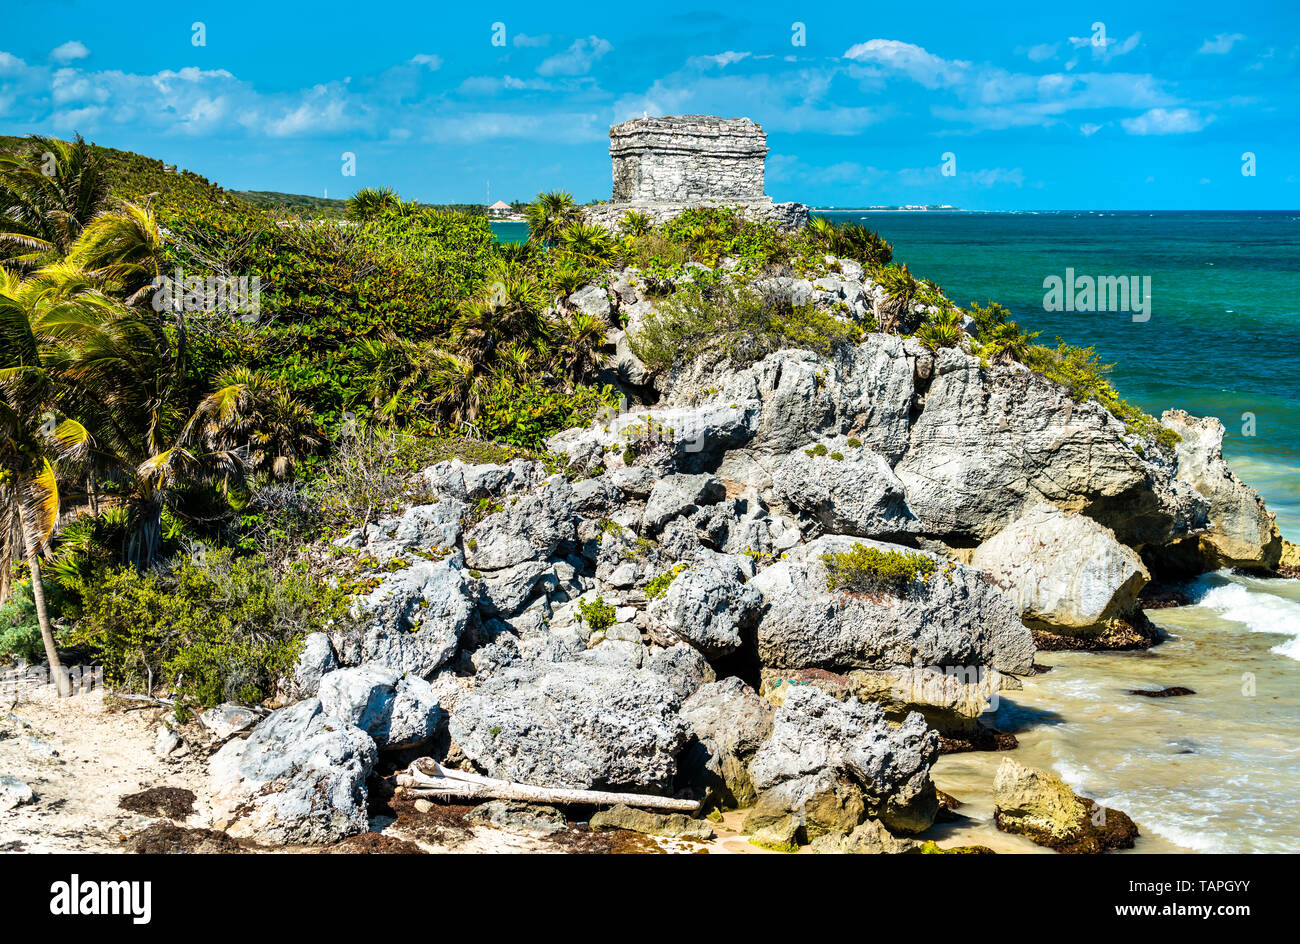 Mayan ruins at the Caribbean Seaside - Tulum, Mexico Stock Photo